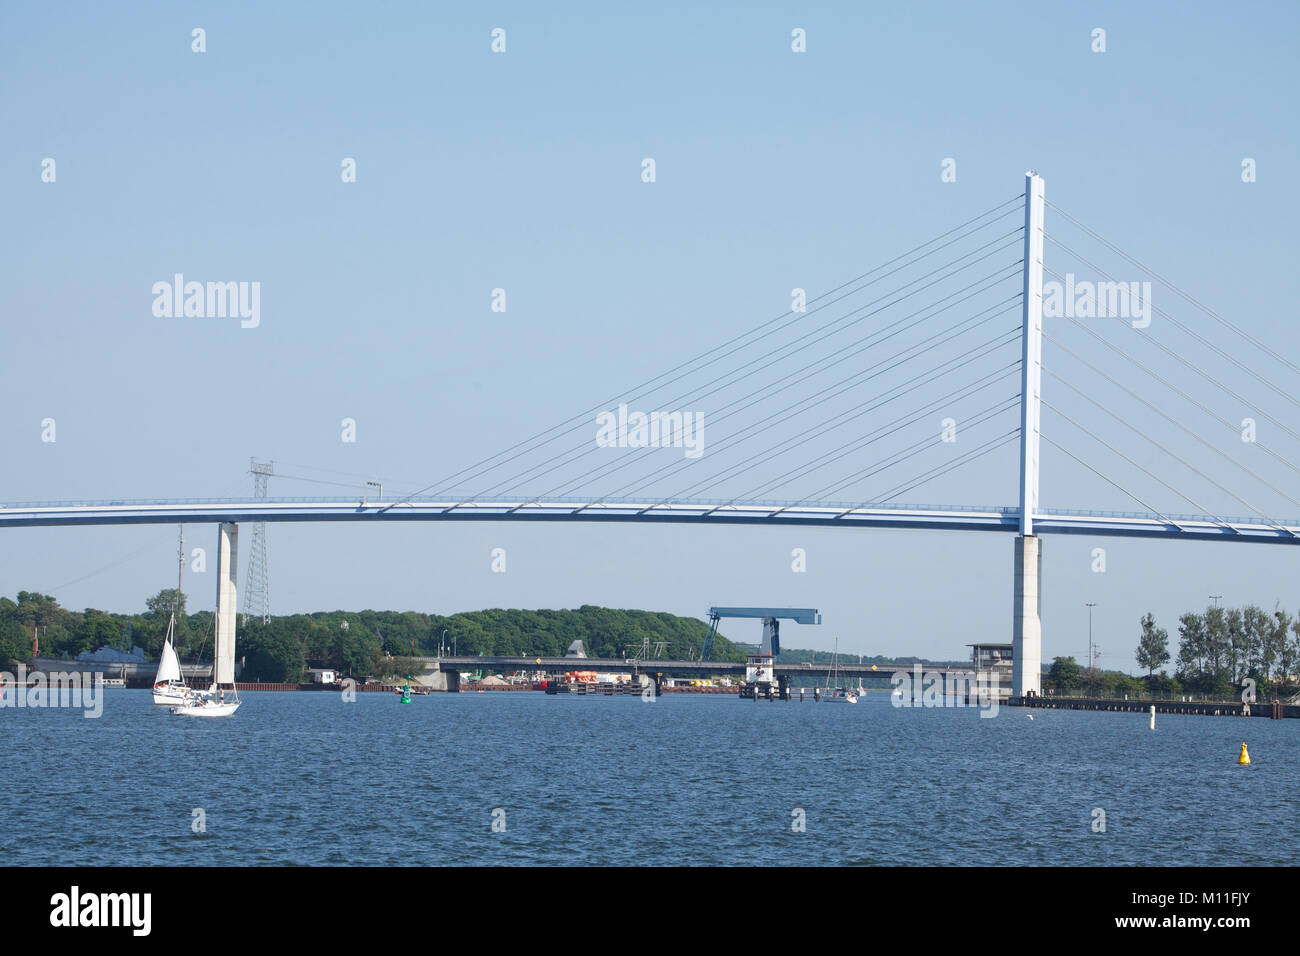 Rügenbrücke Bridge Stralsund, Mecklenburg-West Pomerania, Germany, Europe  I Rügenbrücke über den Strelasund, Stralsund, Mecklenburg-Vorpommern, Deuts Stock Photo